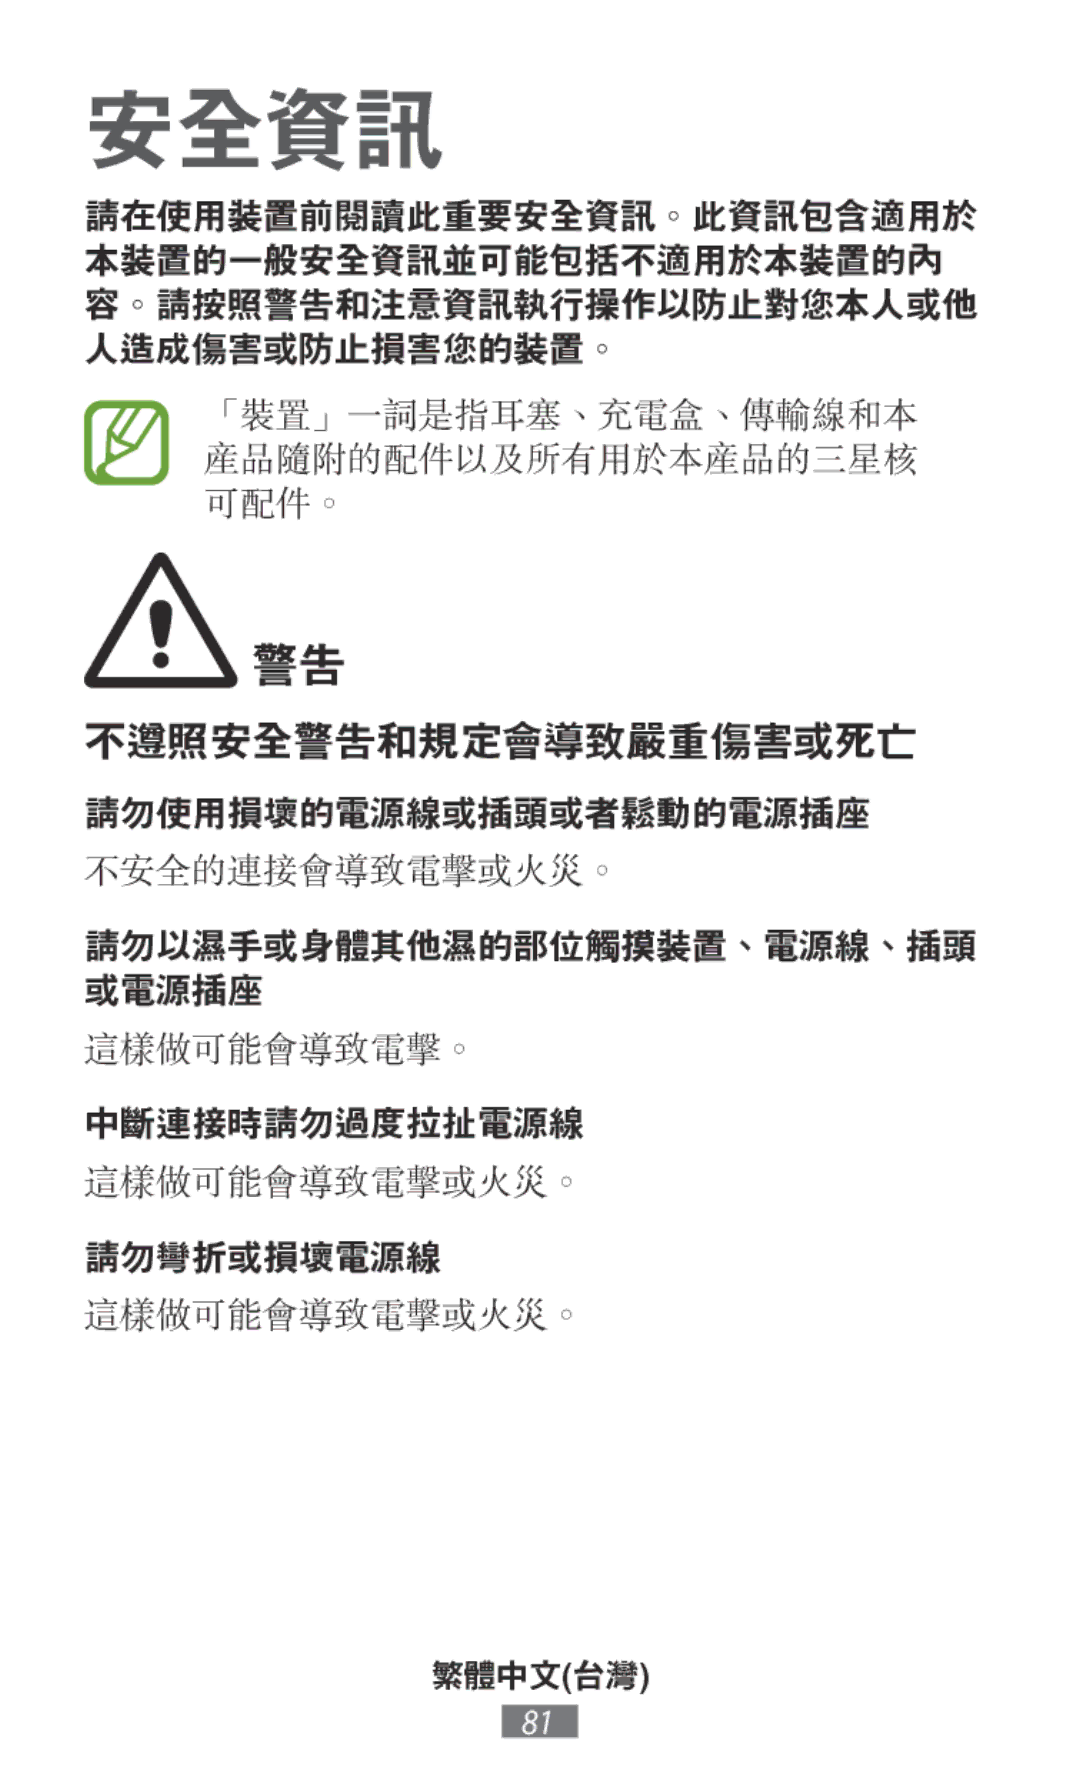 Samsung SM-R140NZAAXJP, SM-R140NZKAXJP, SM-R140NZIAXJP, SM-R140NZAAKSA, SM-R140NZKAILO manual 不遵照安全警告和規定會導致嚴重傷害或死亡 